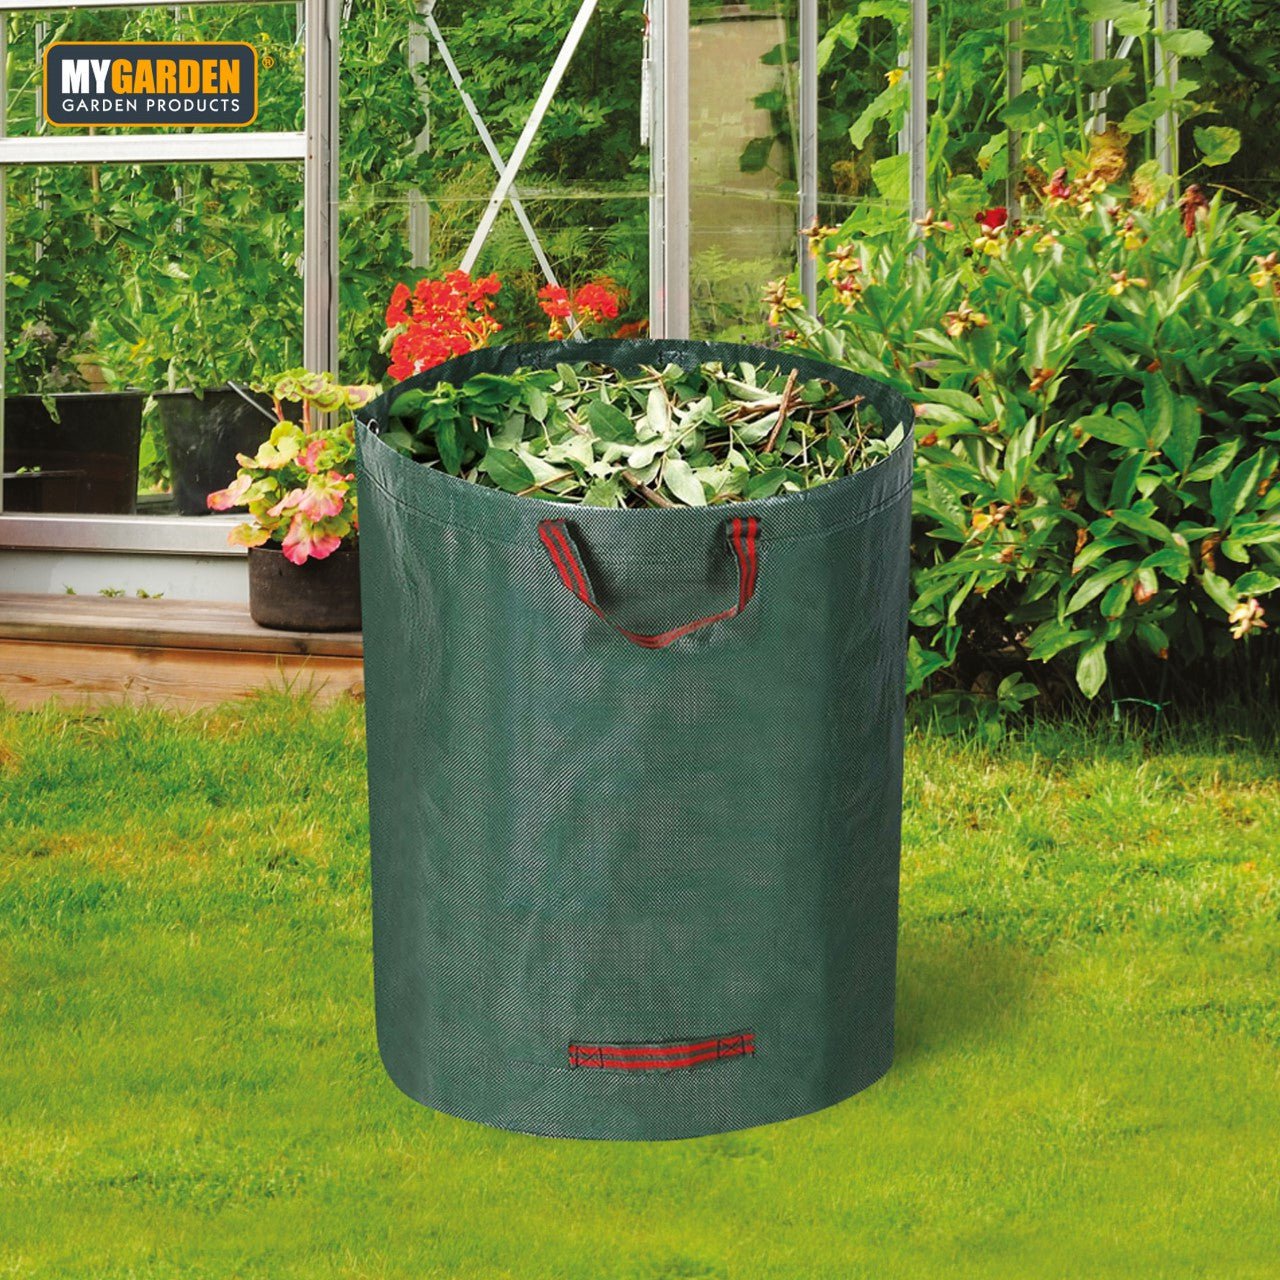 200 Litre Reusable Heavy Duty Garden Waste Sack 1168 (Parcel Rate)